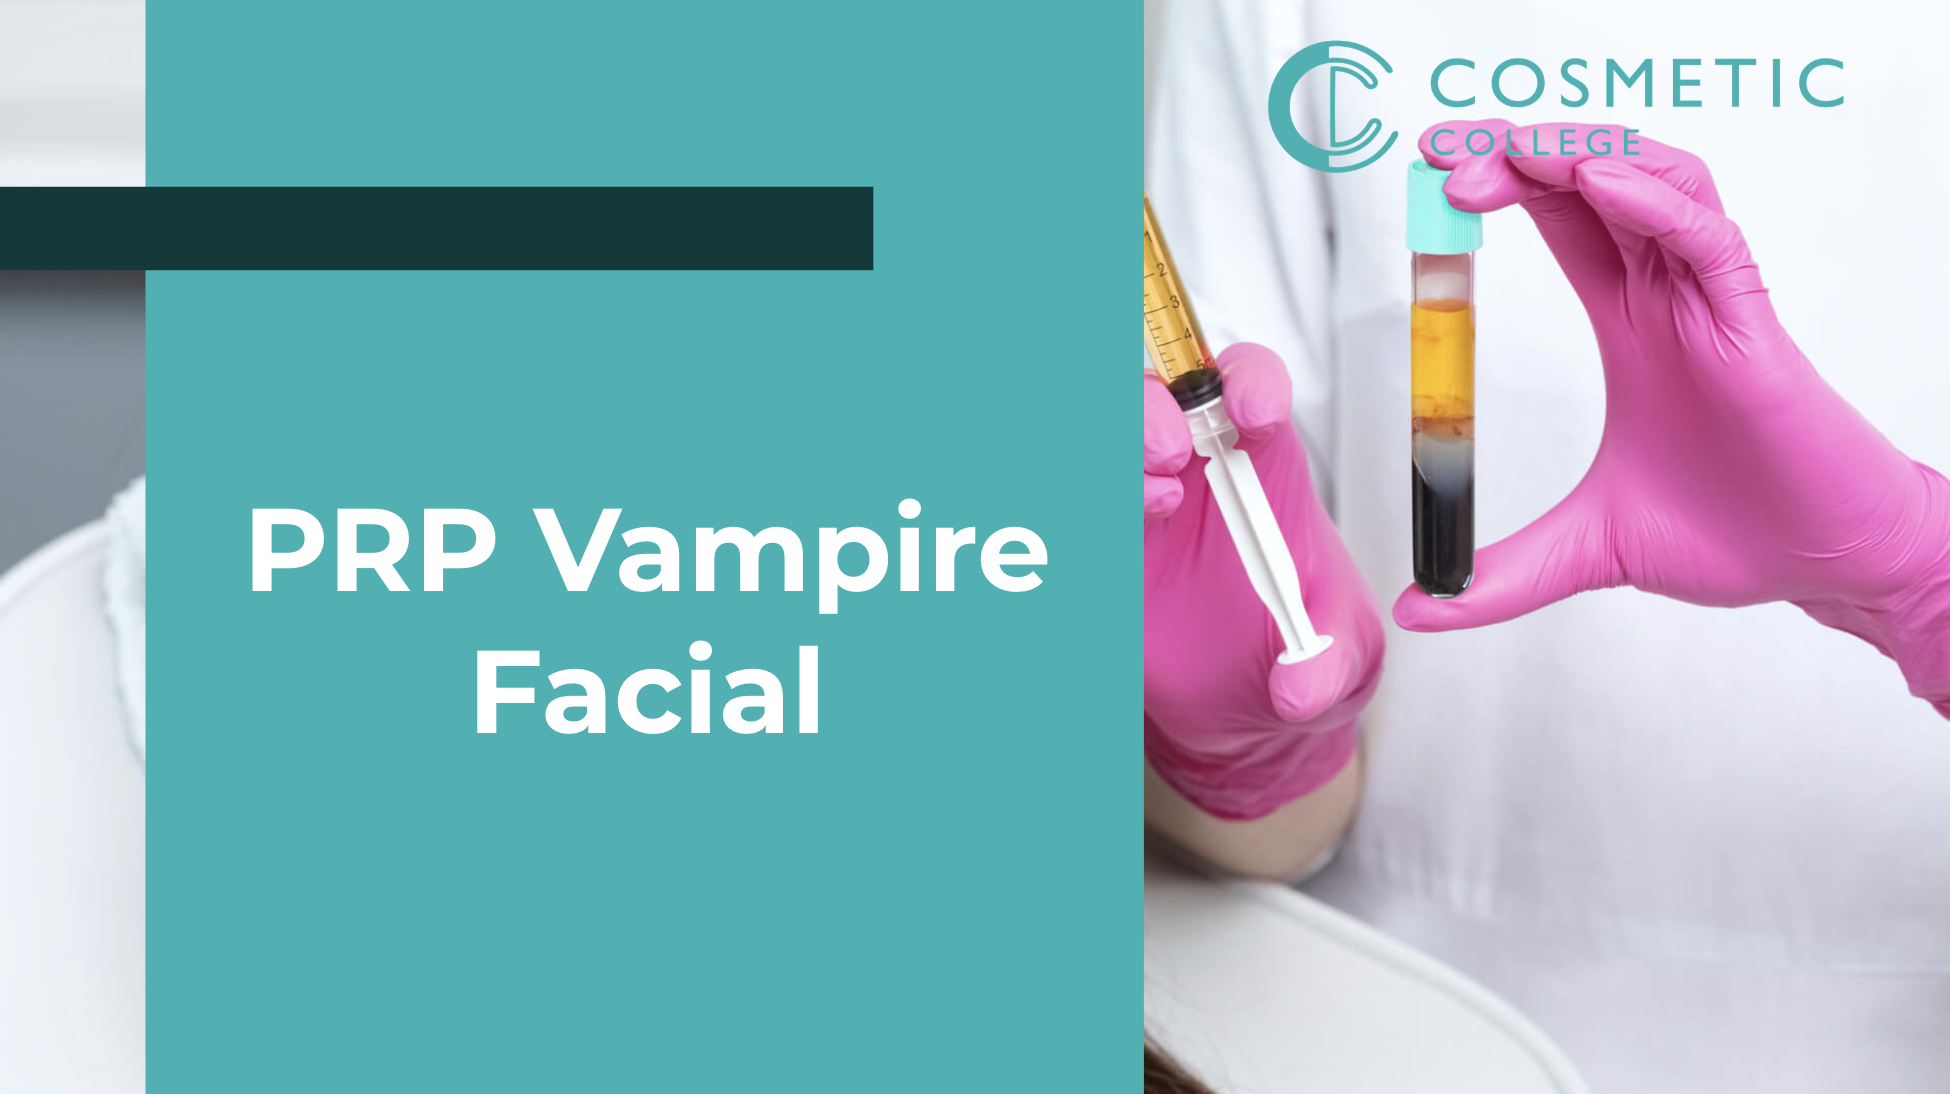 Online PRP Vampire Facial Training Course